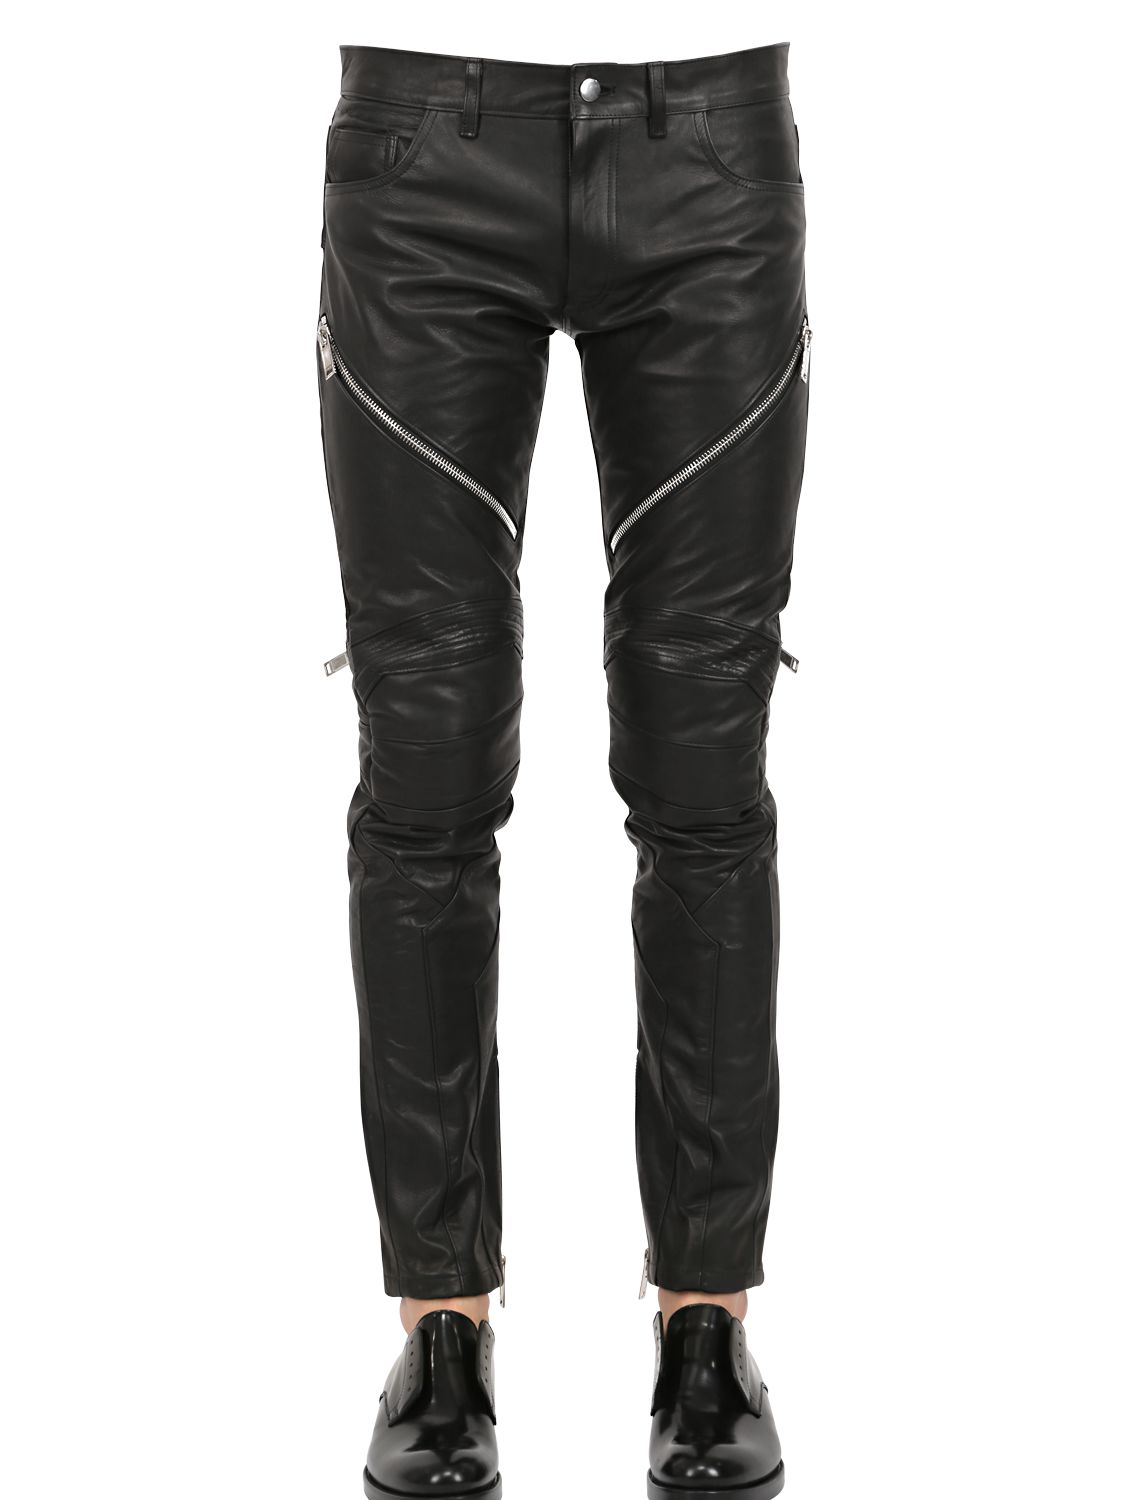 Lyst - Christian dada 17cm Leather Biker Pants in Black